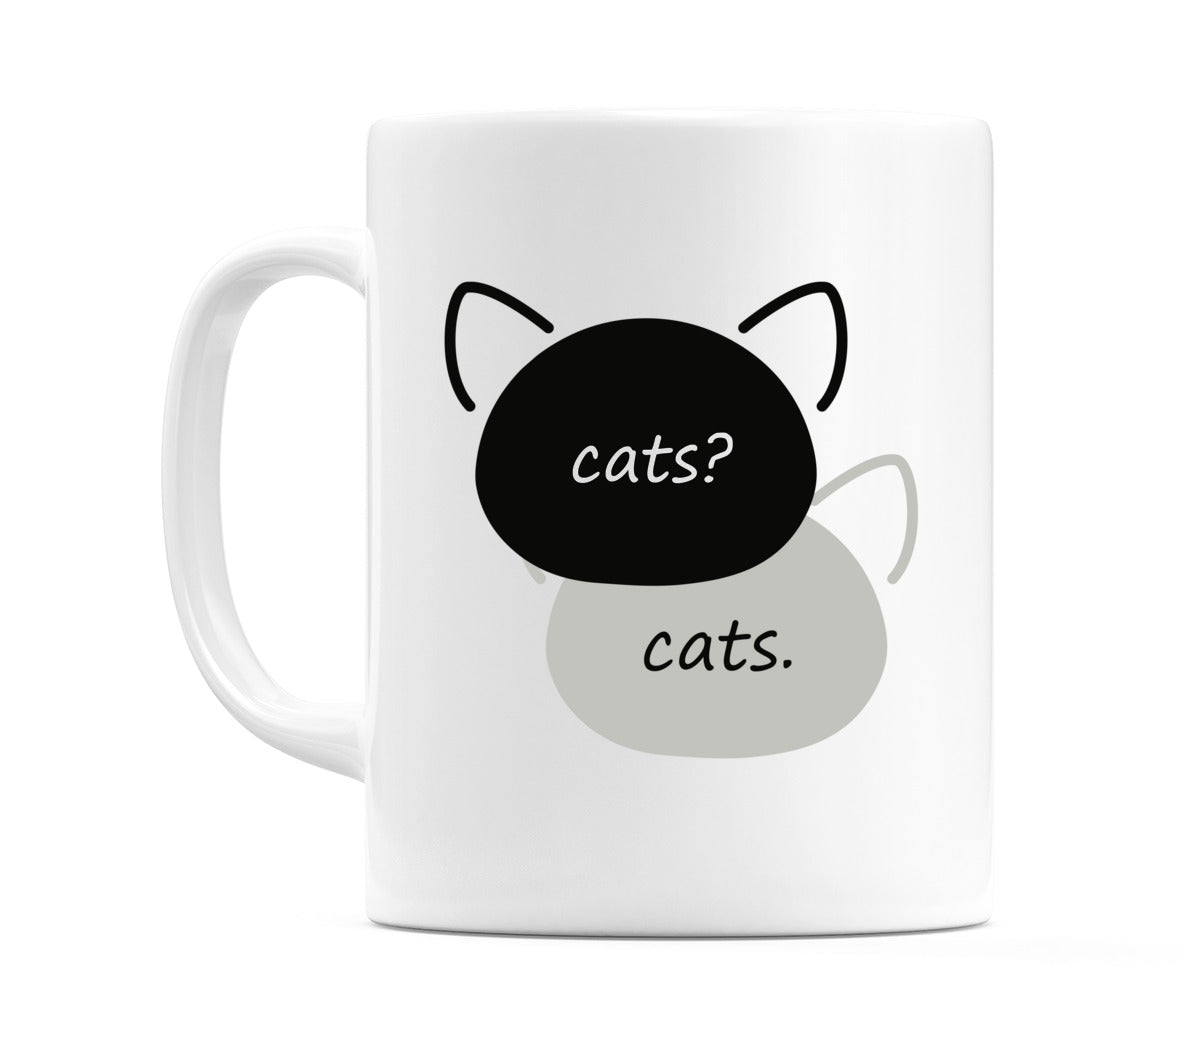 cats? cats. Mug